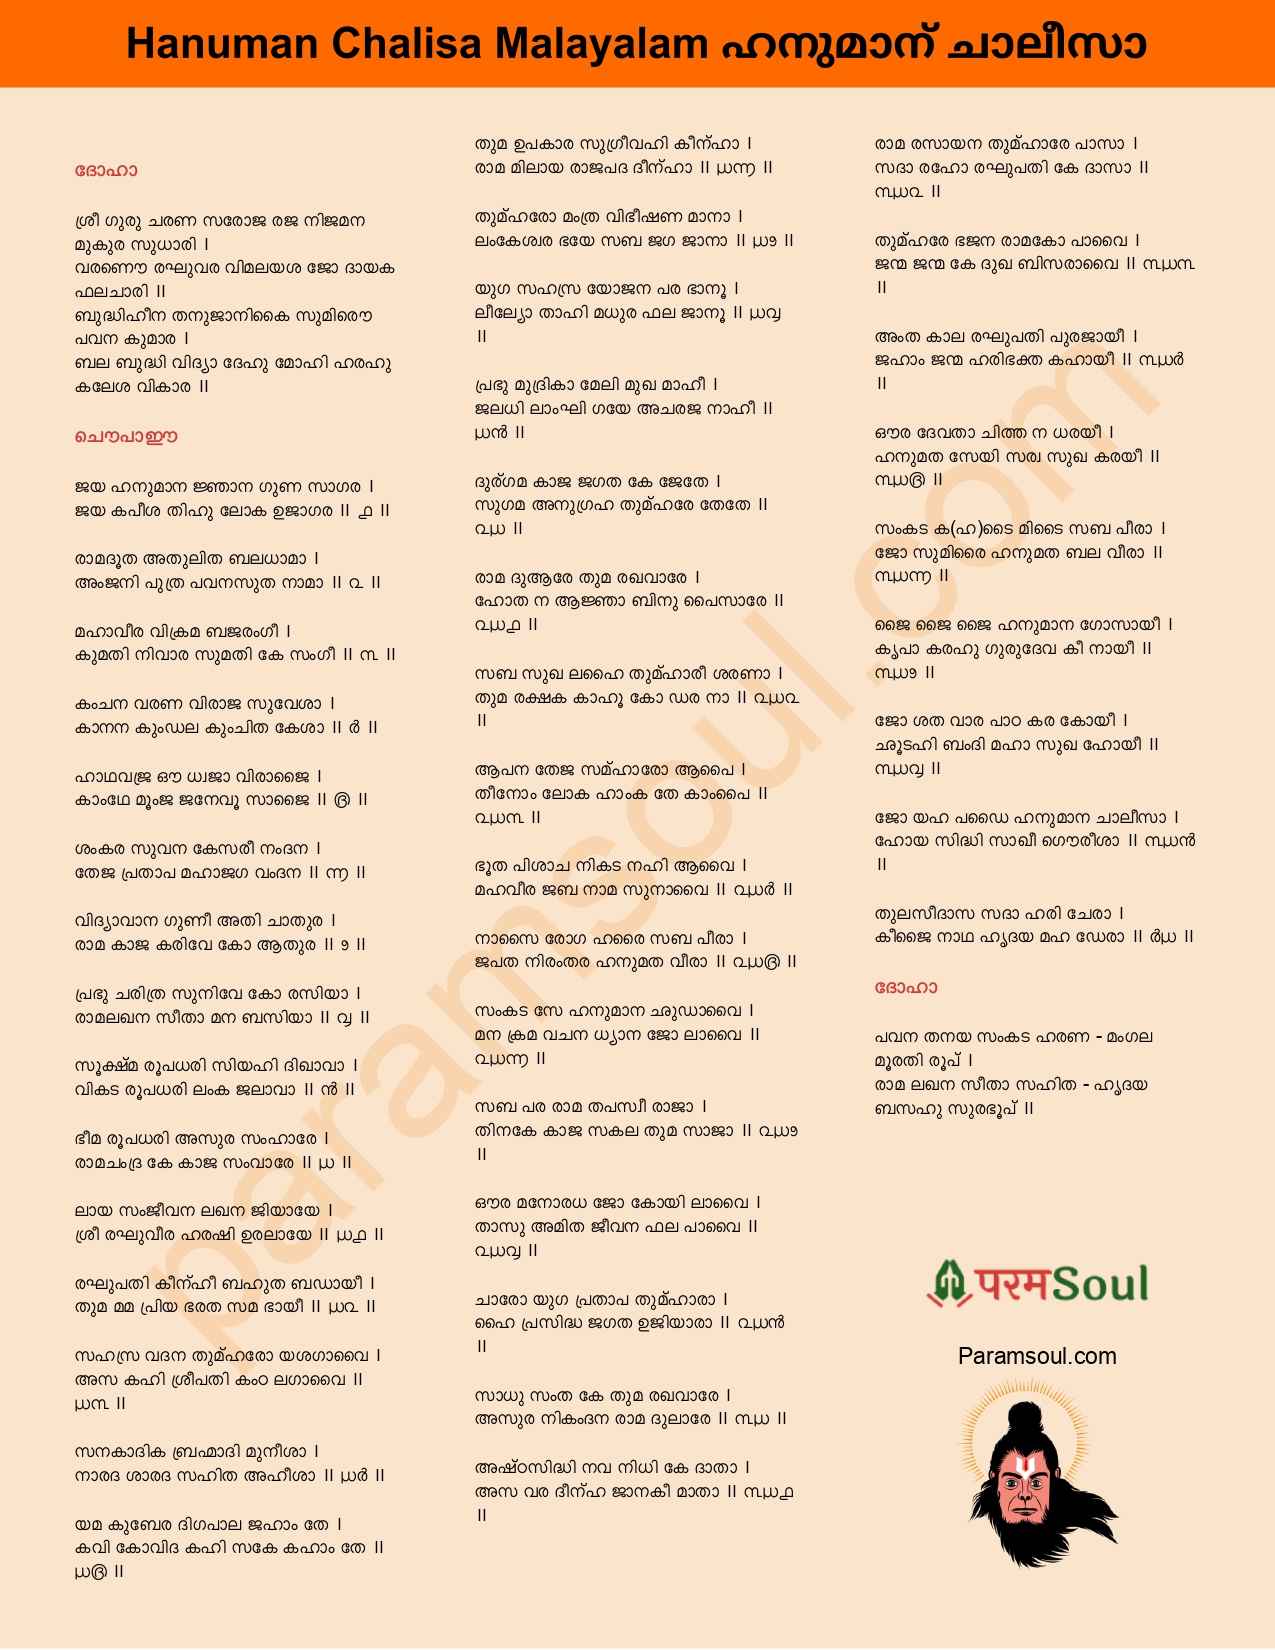 Hanuman Chalisa Malayalam Lyrics ഹനുമാന് ചാലീസാ മലയാളം വരികൾ